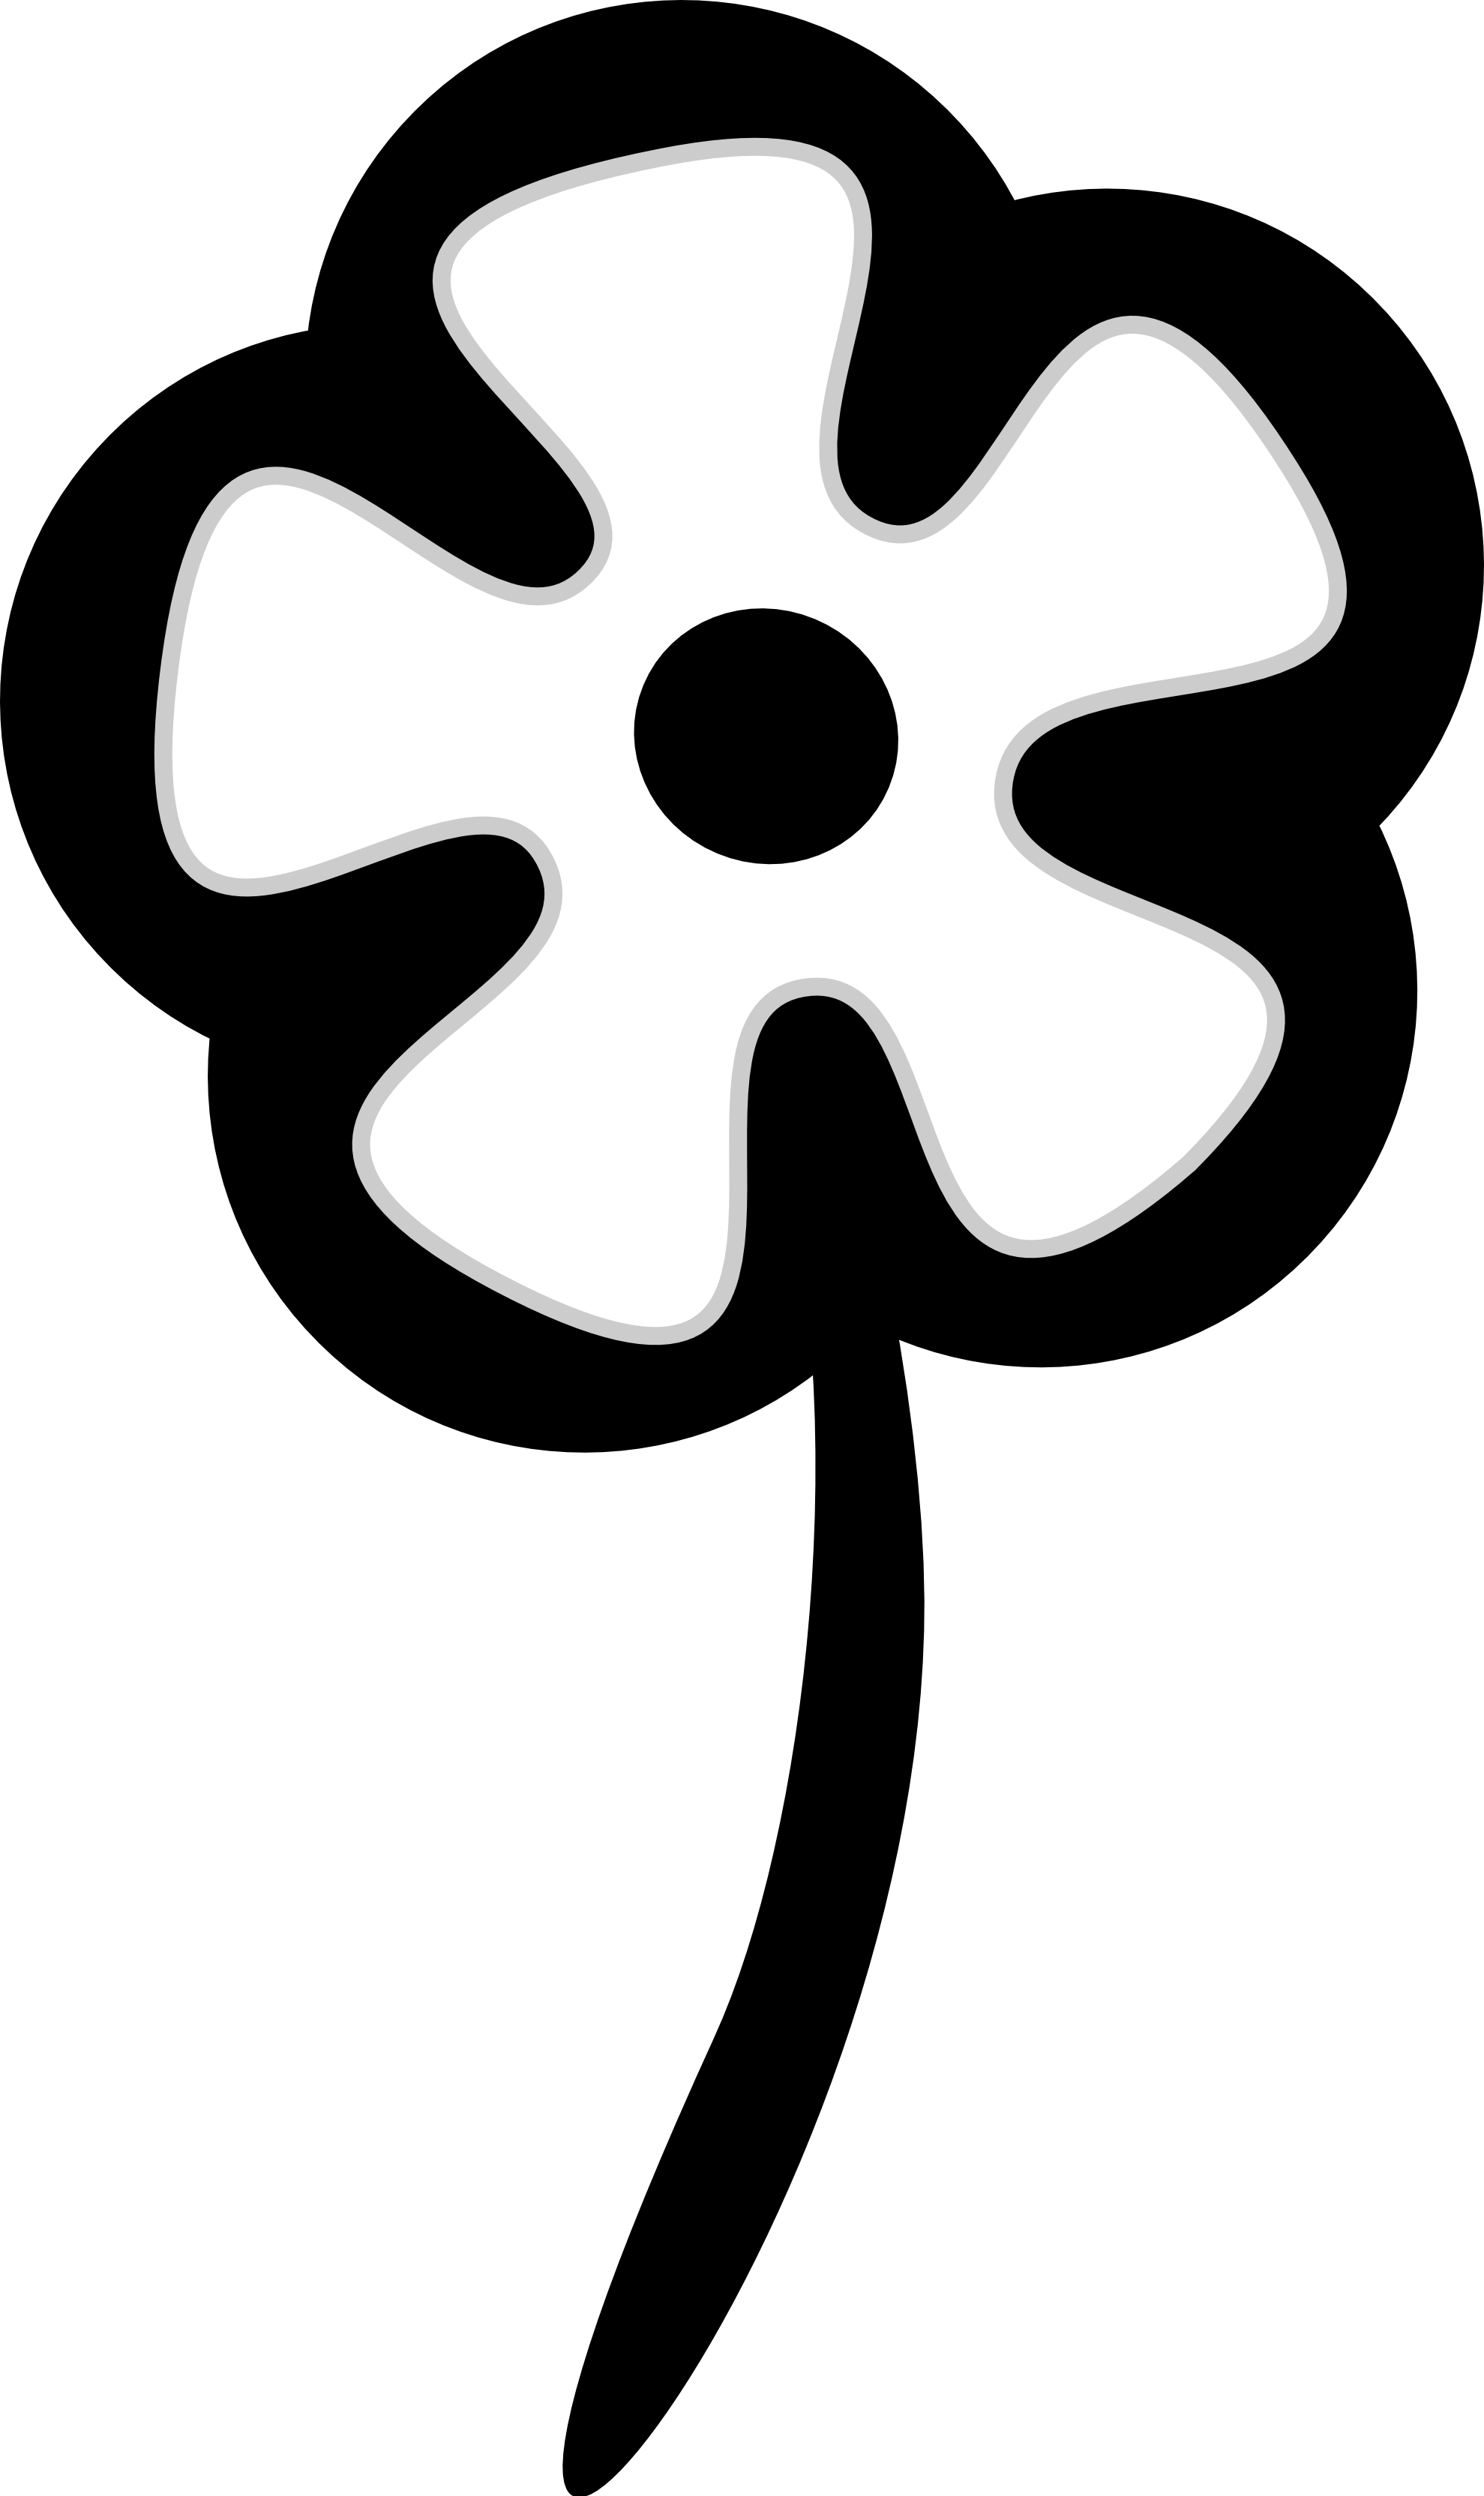 Black and White Flower Logo - Free Flower Images Black And White, Download Free Clip Art, Free ...